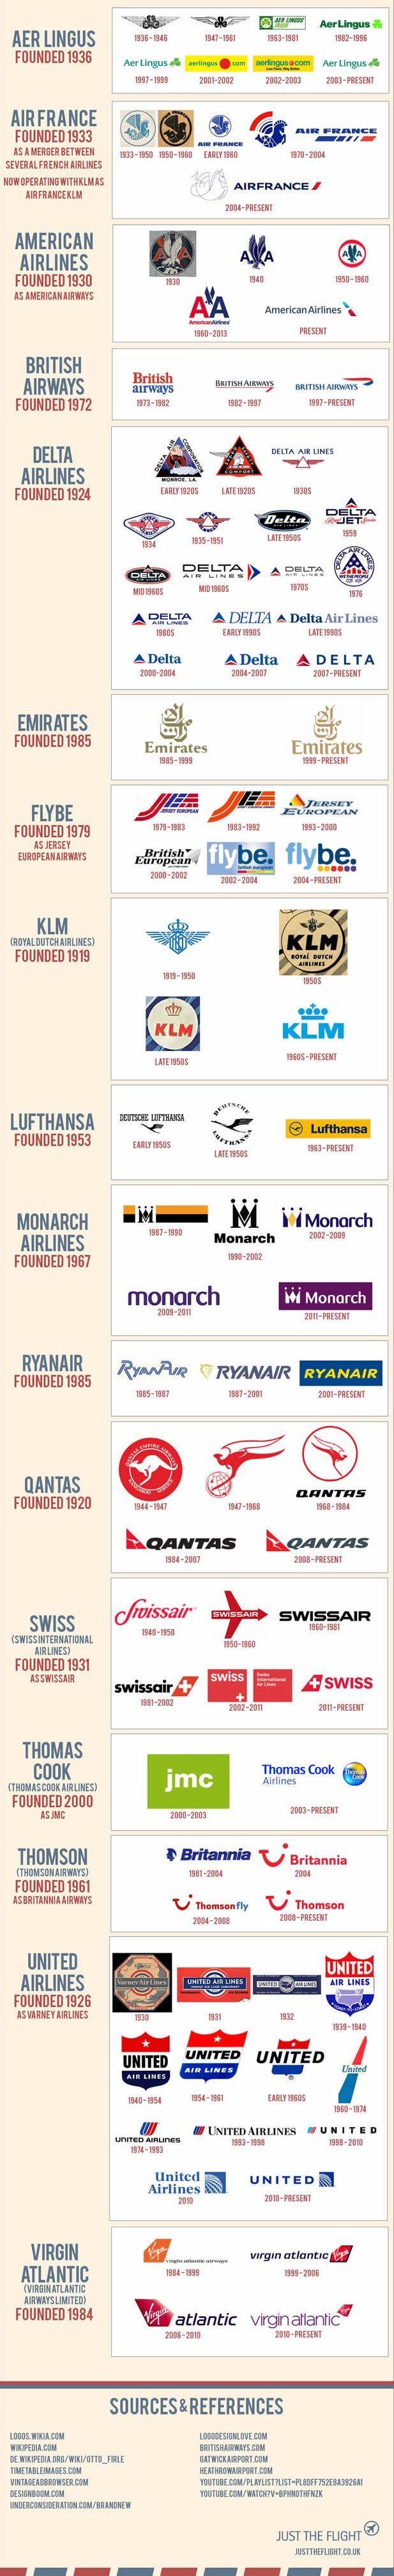 Major Airline Logo - The evolution of airline logos